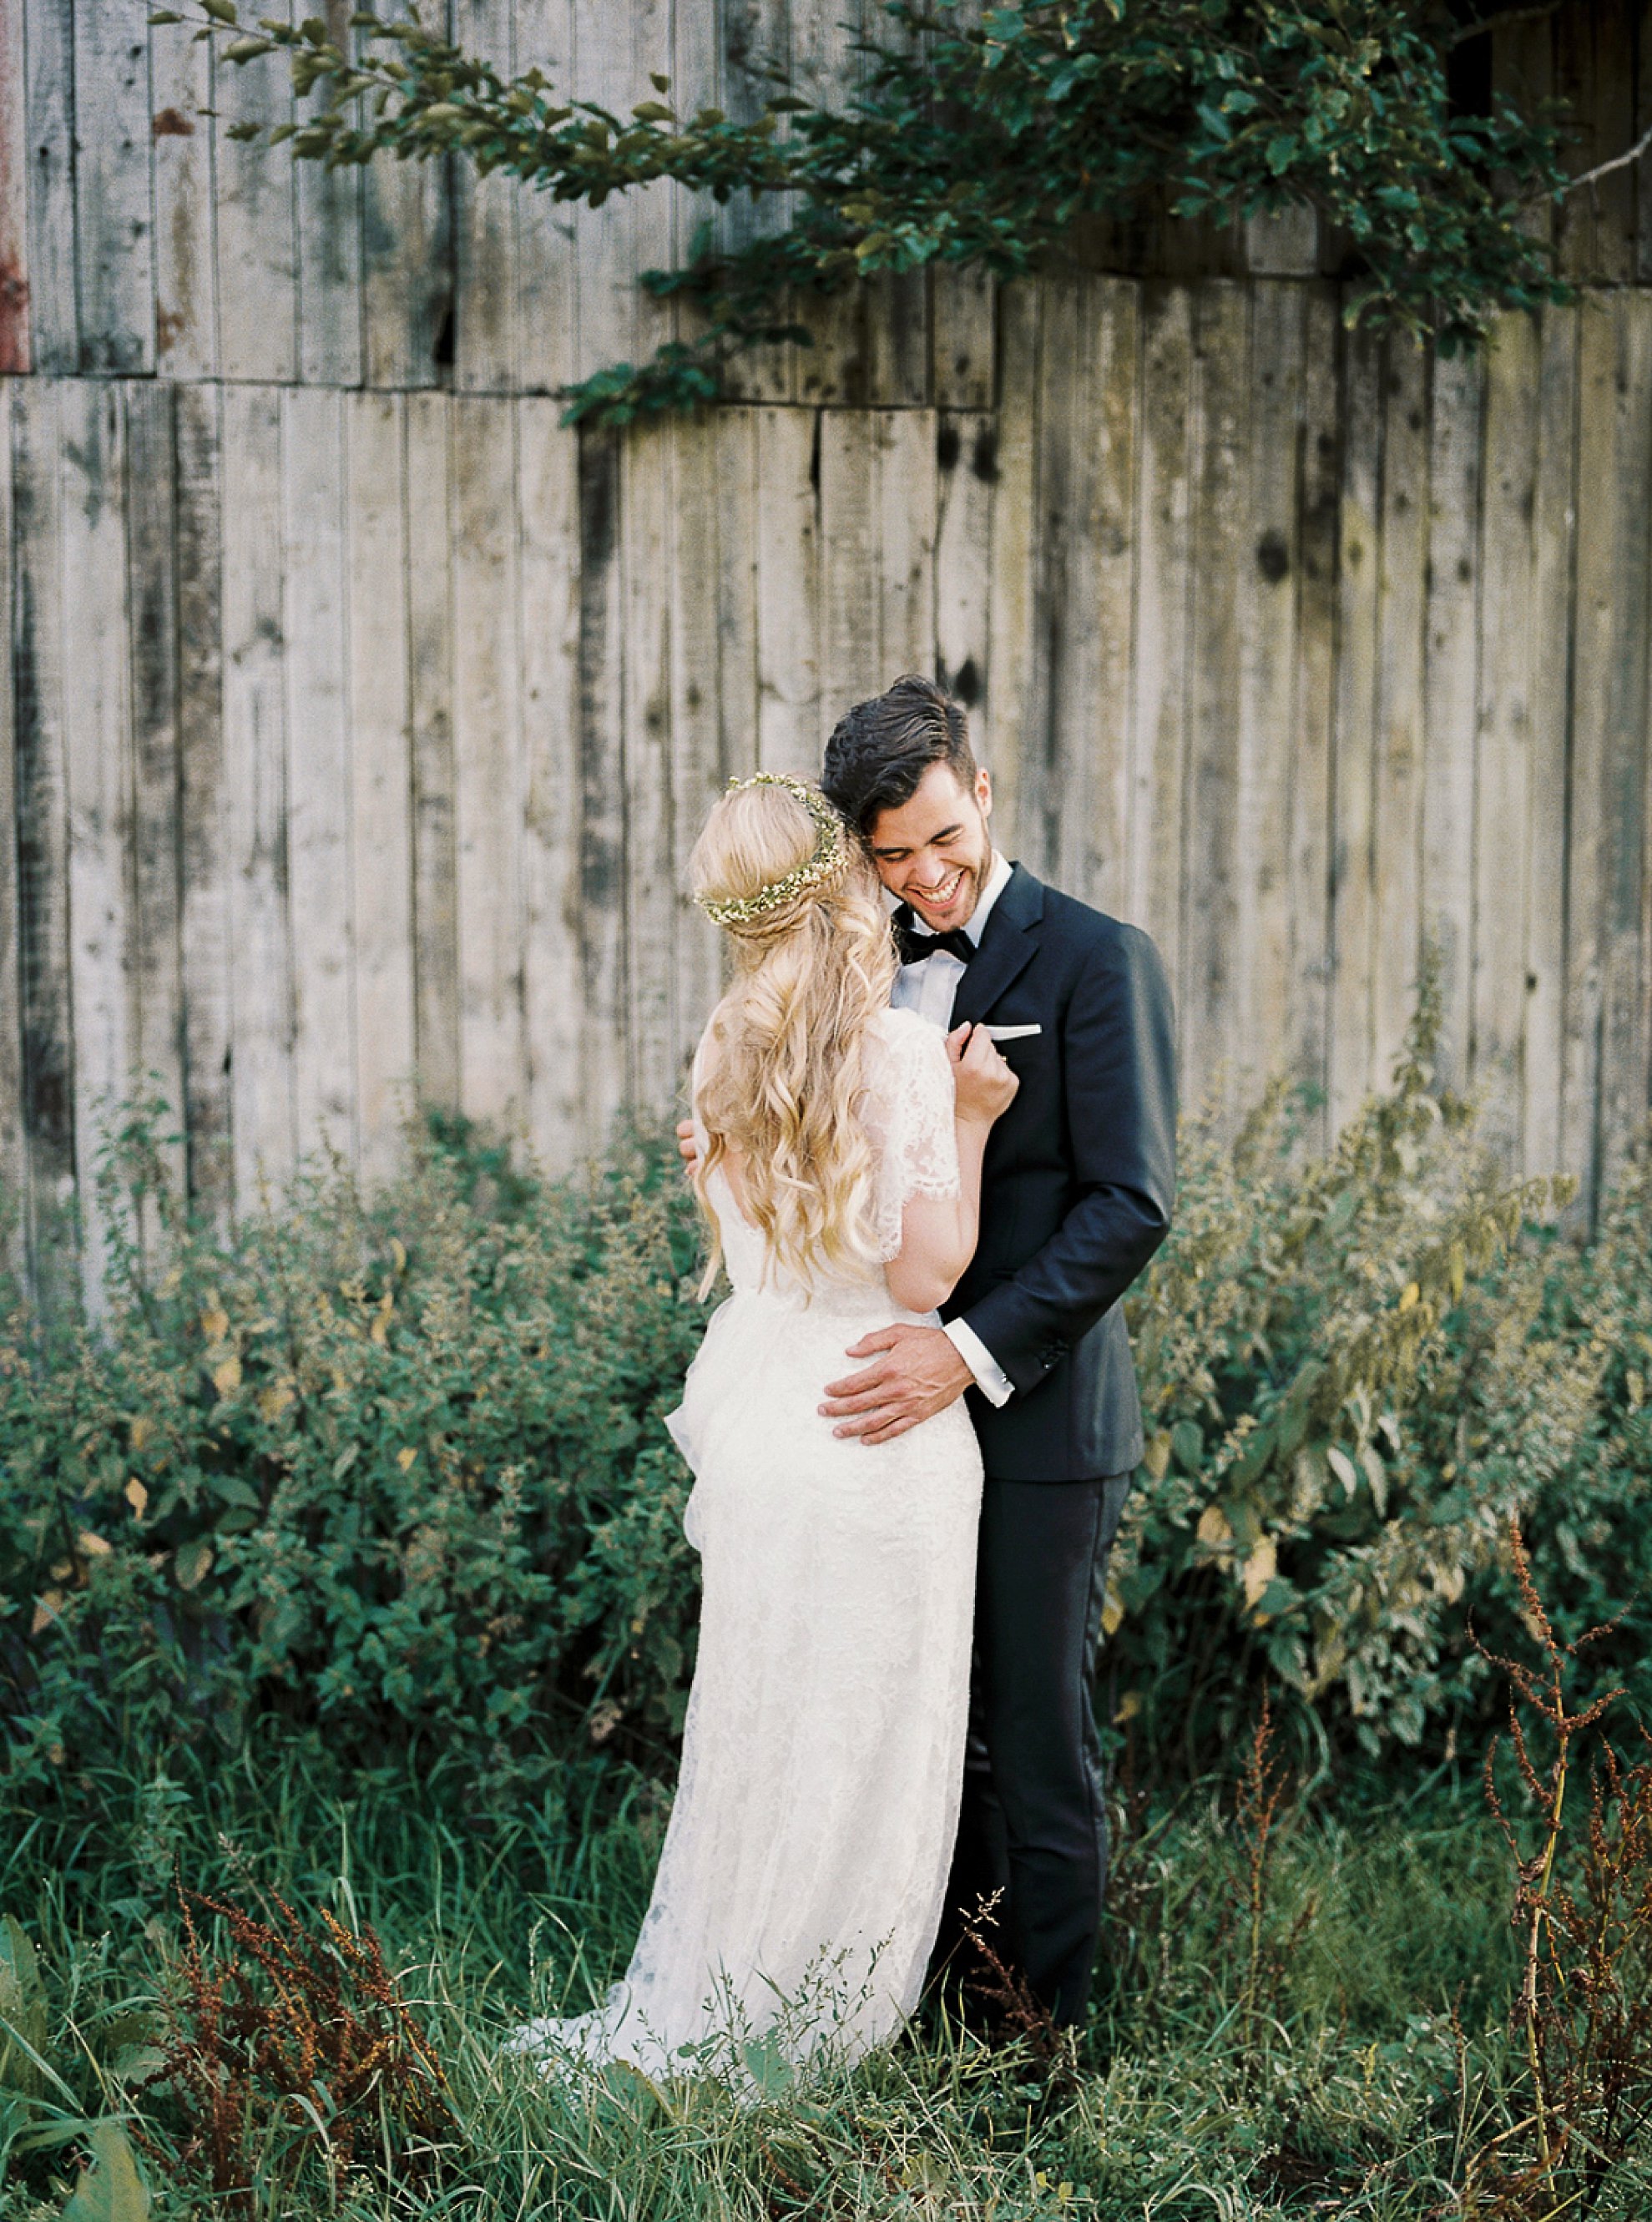 Amanda-Drost-Fotografie-Belgie-Photography-Wedding_0004.jpg